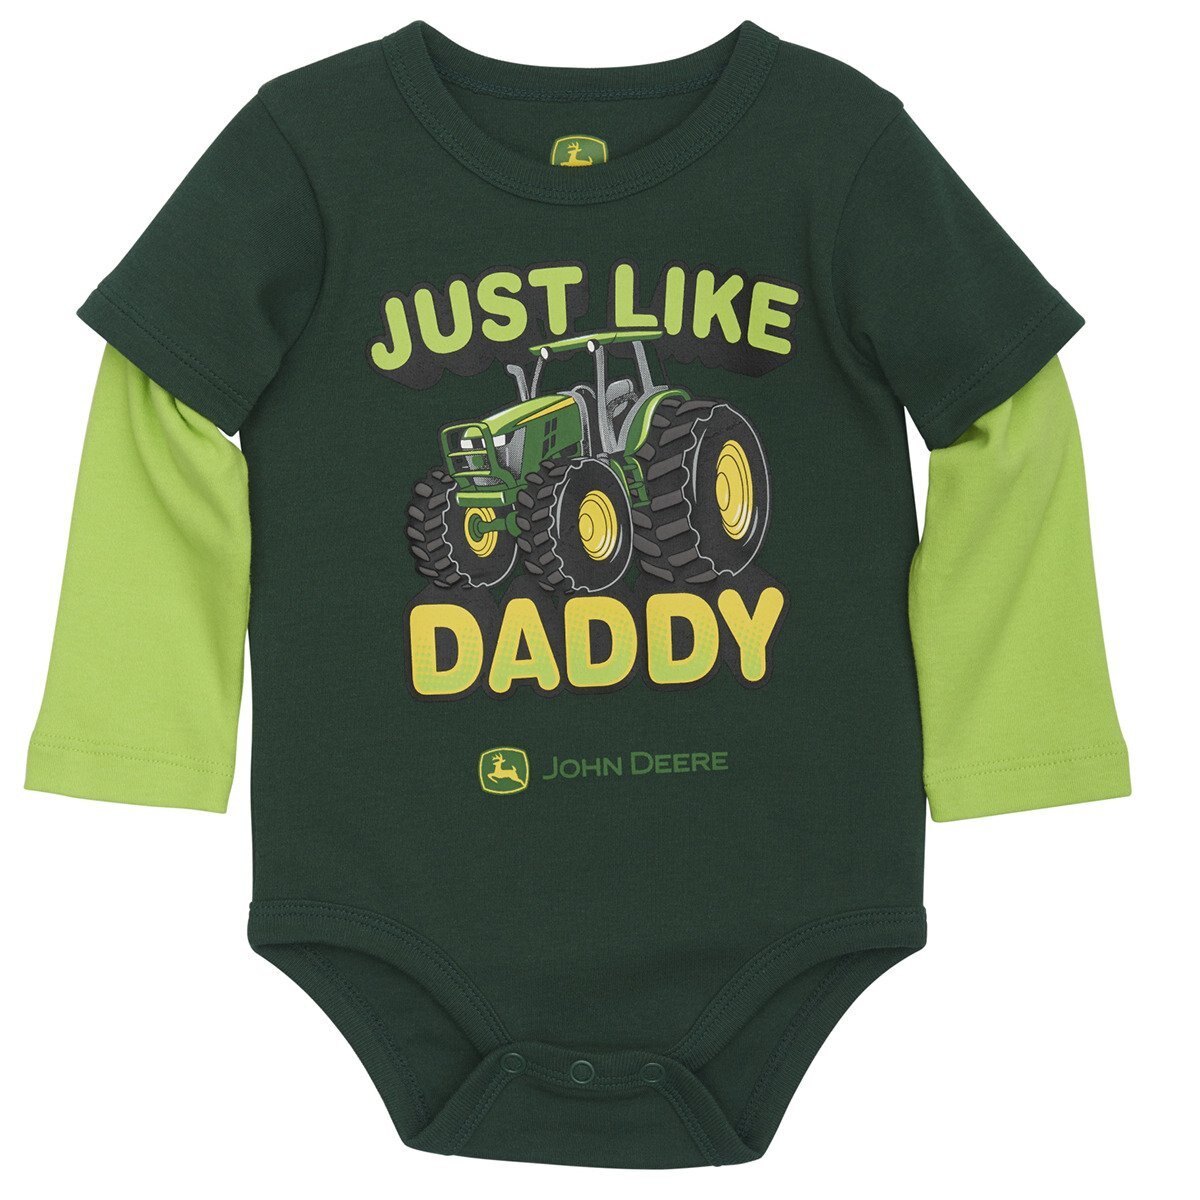 John Deere Infant Bodyshirt "Just Like Daddy"